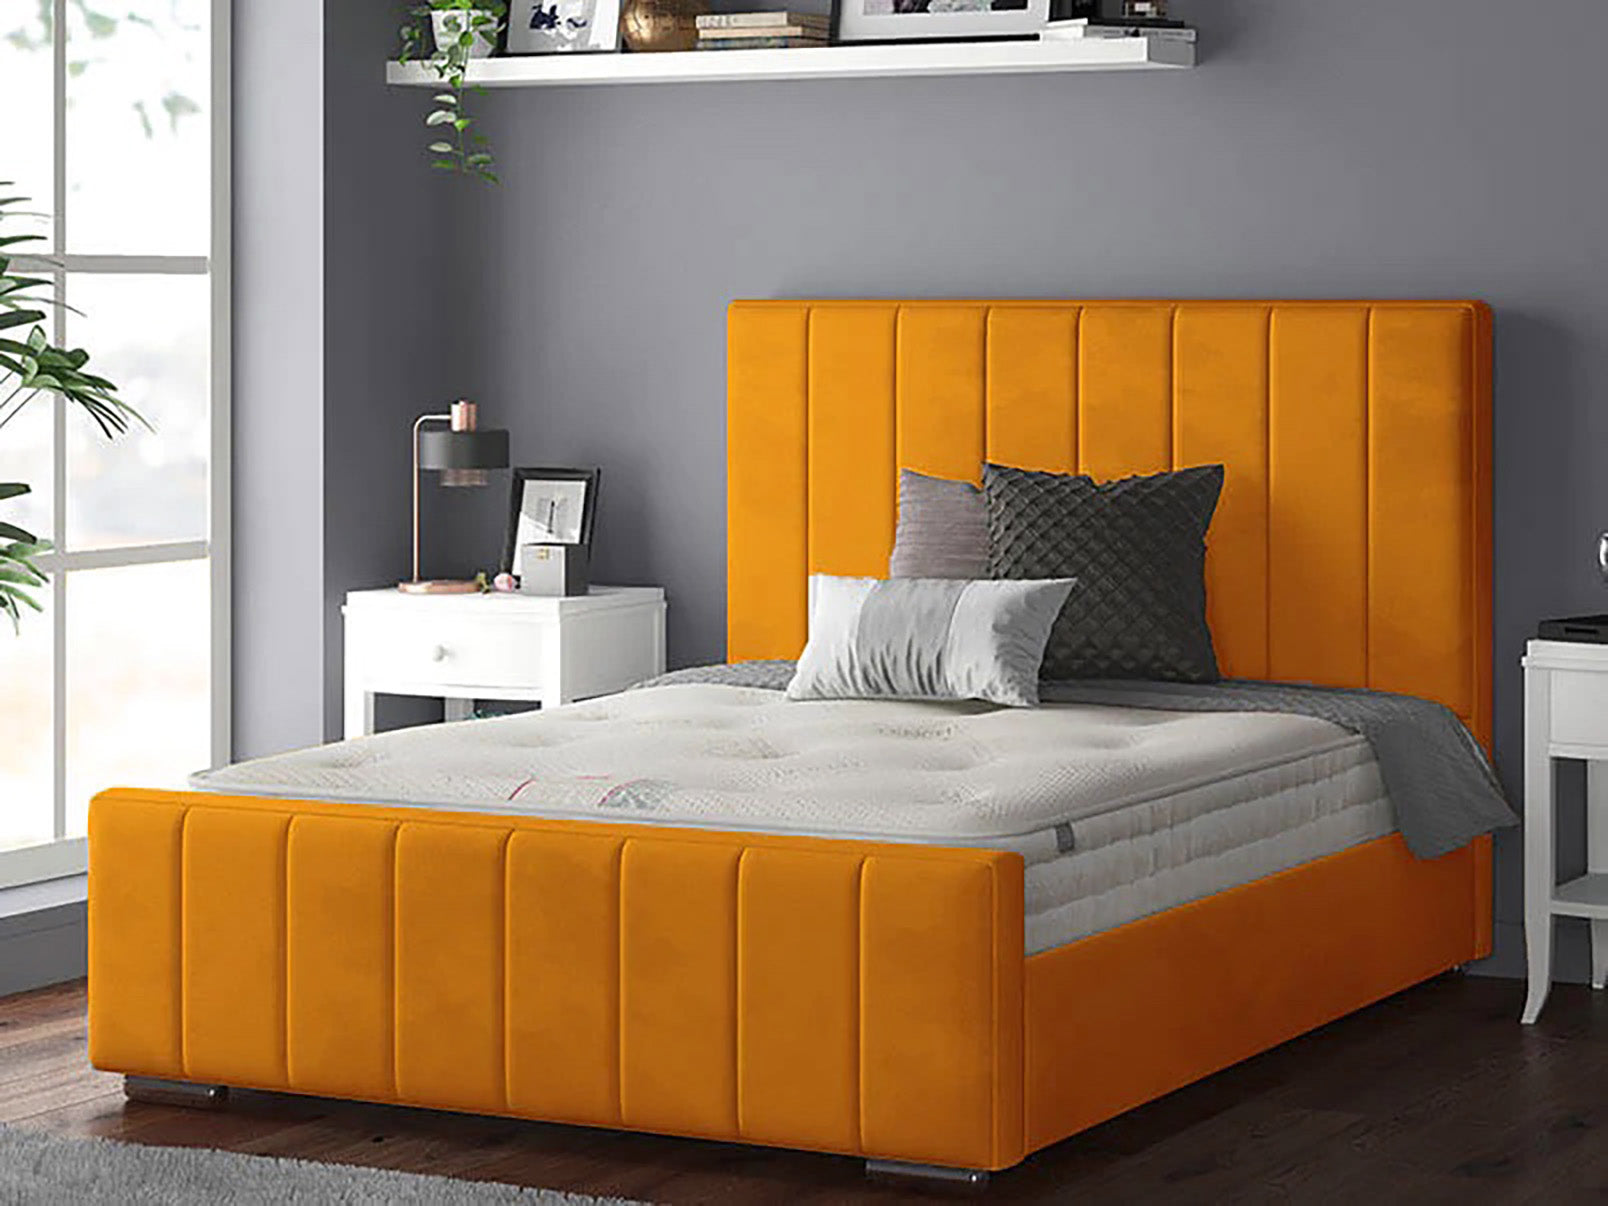 Perth Bed Frame With Ottoman Lift Storage Option - Plush Velvet Burnt Orange